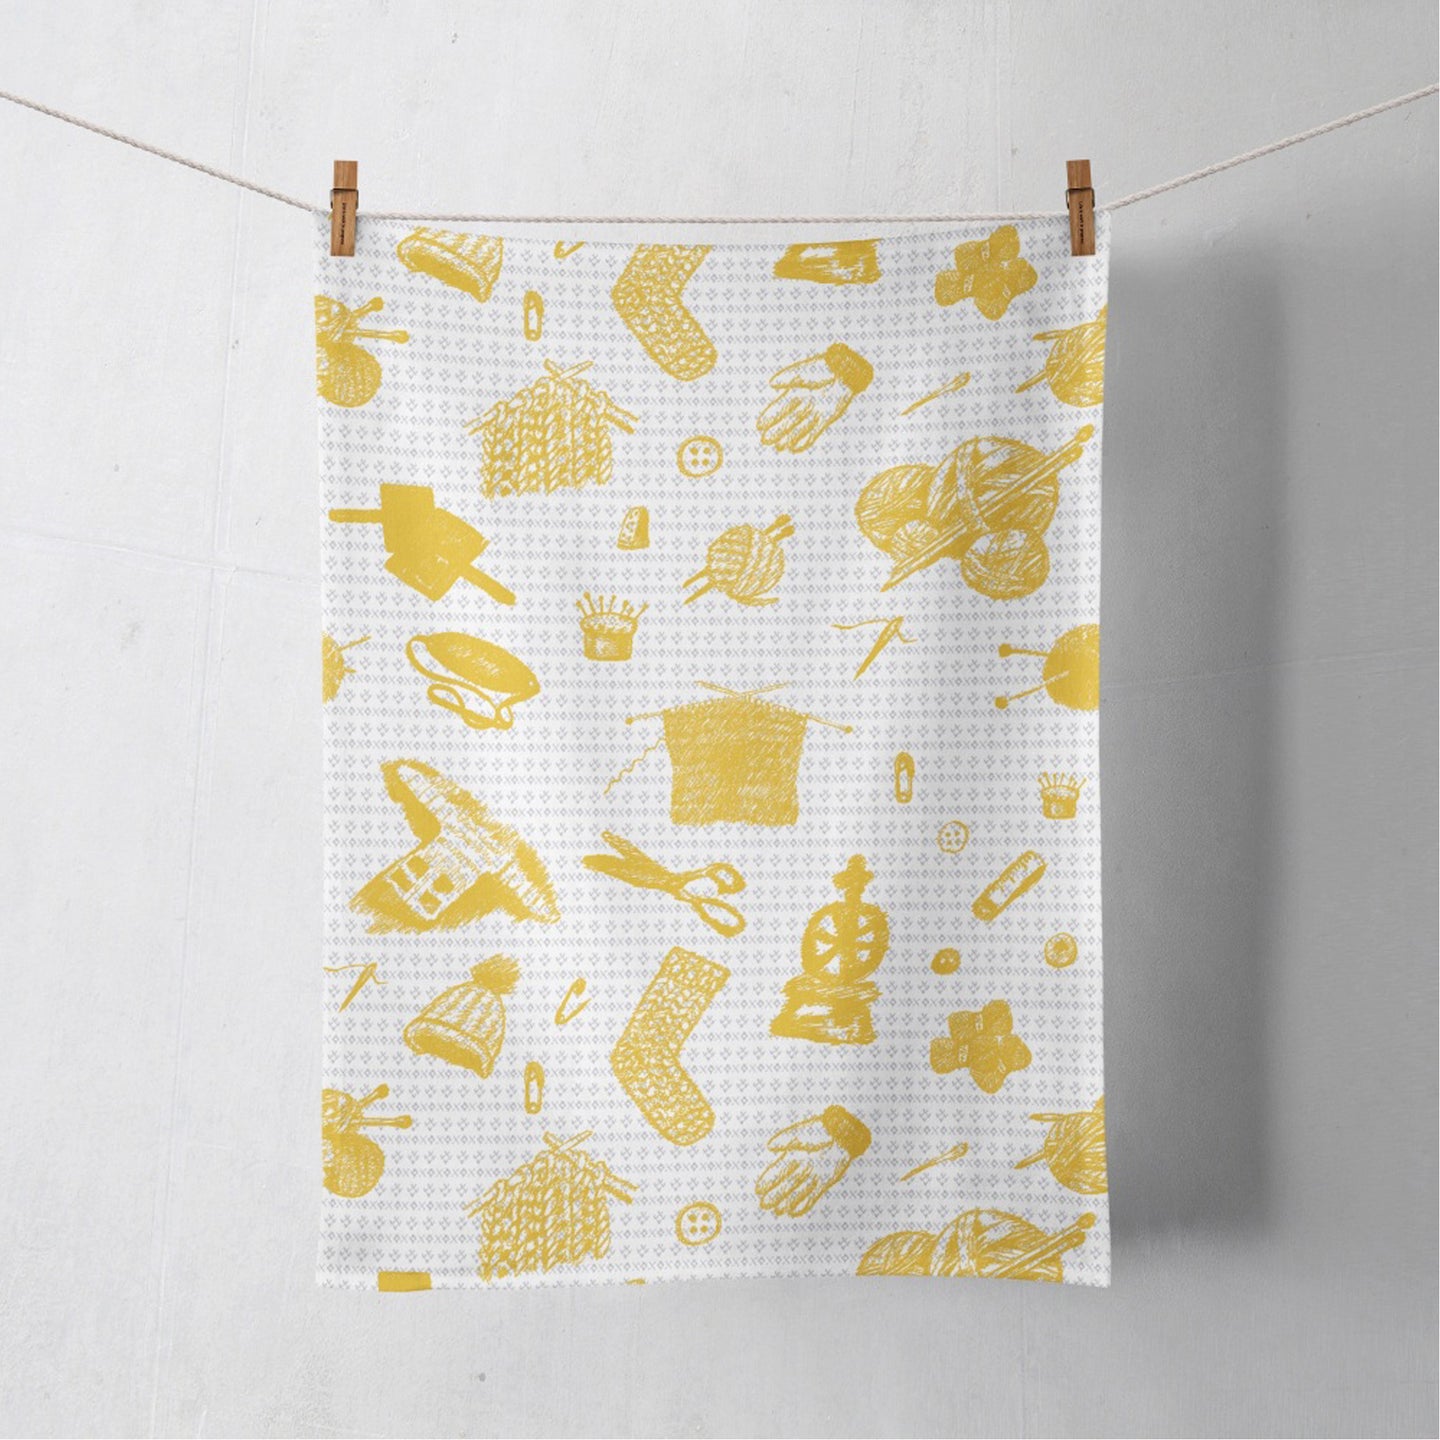 Julie Williamson Tea Towel Tak dee Sock - Yellow